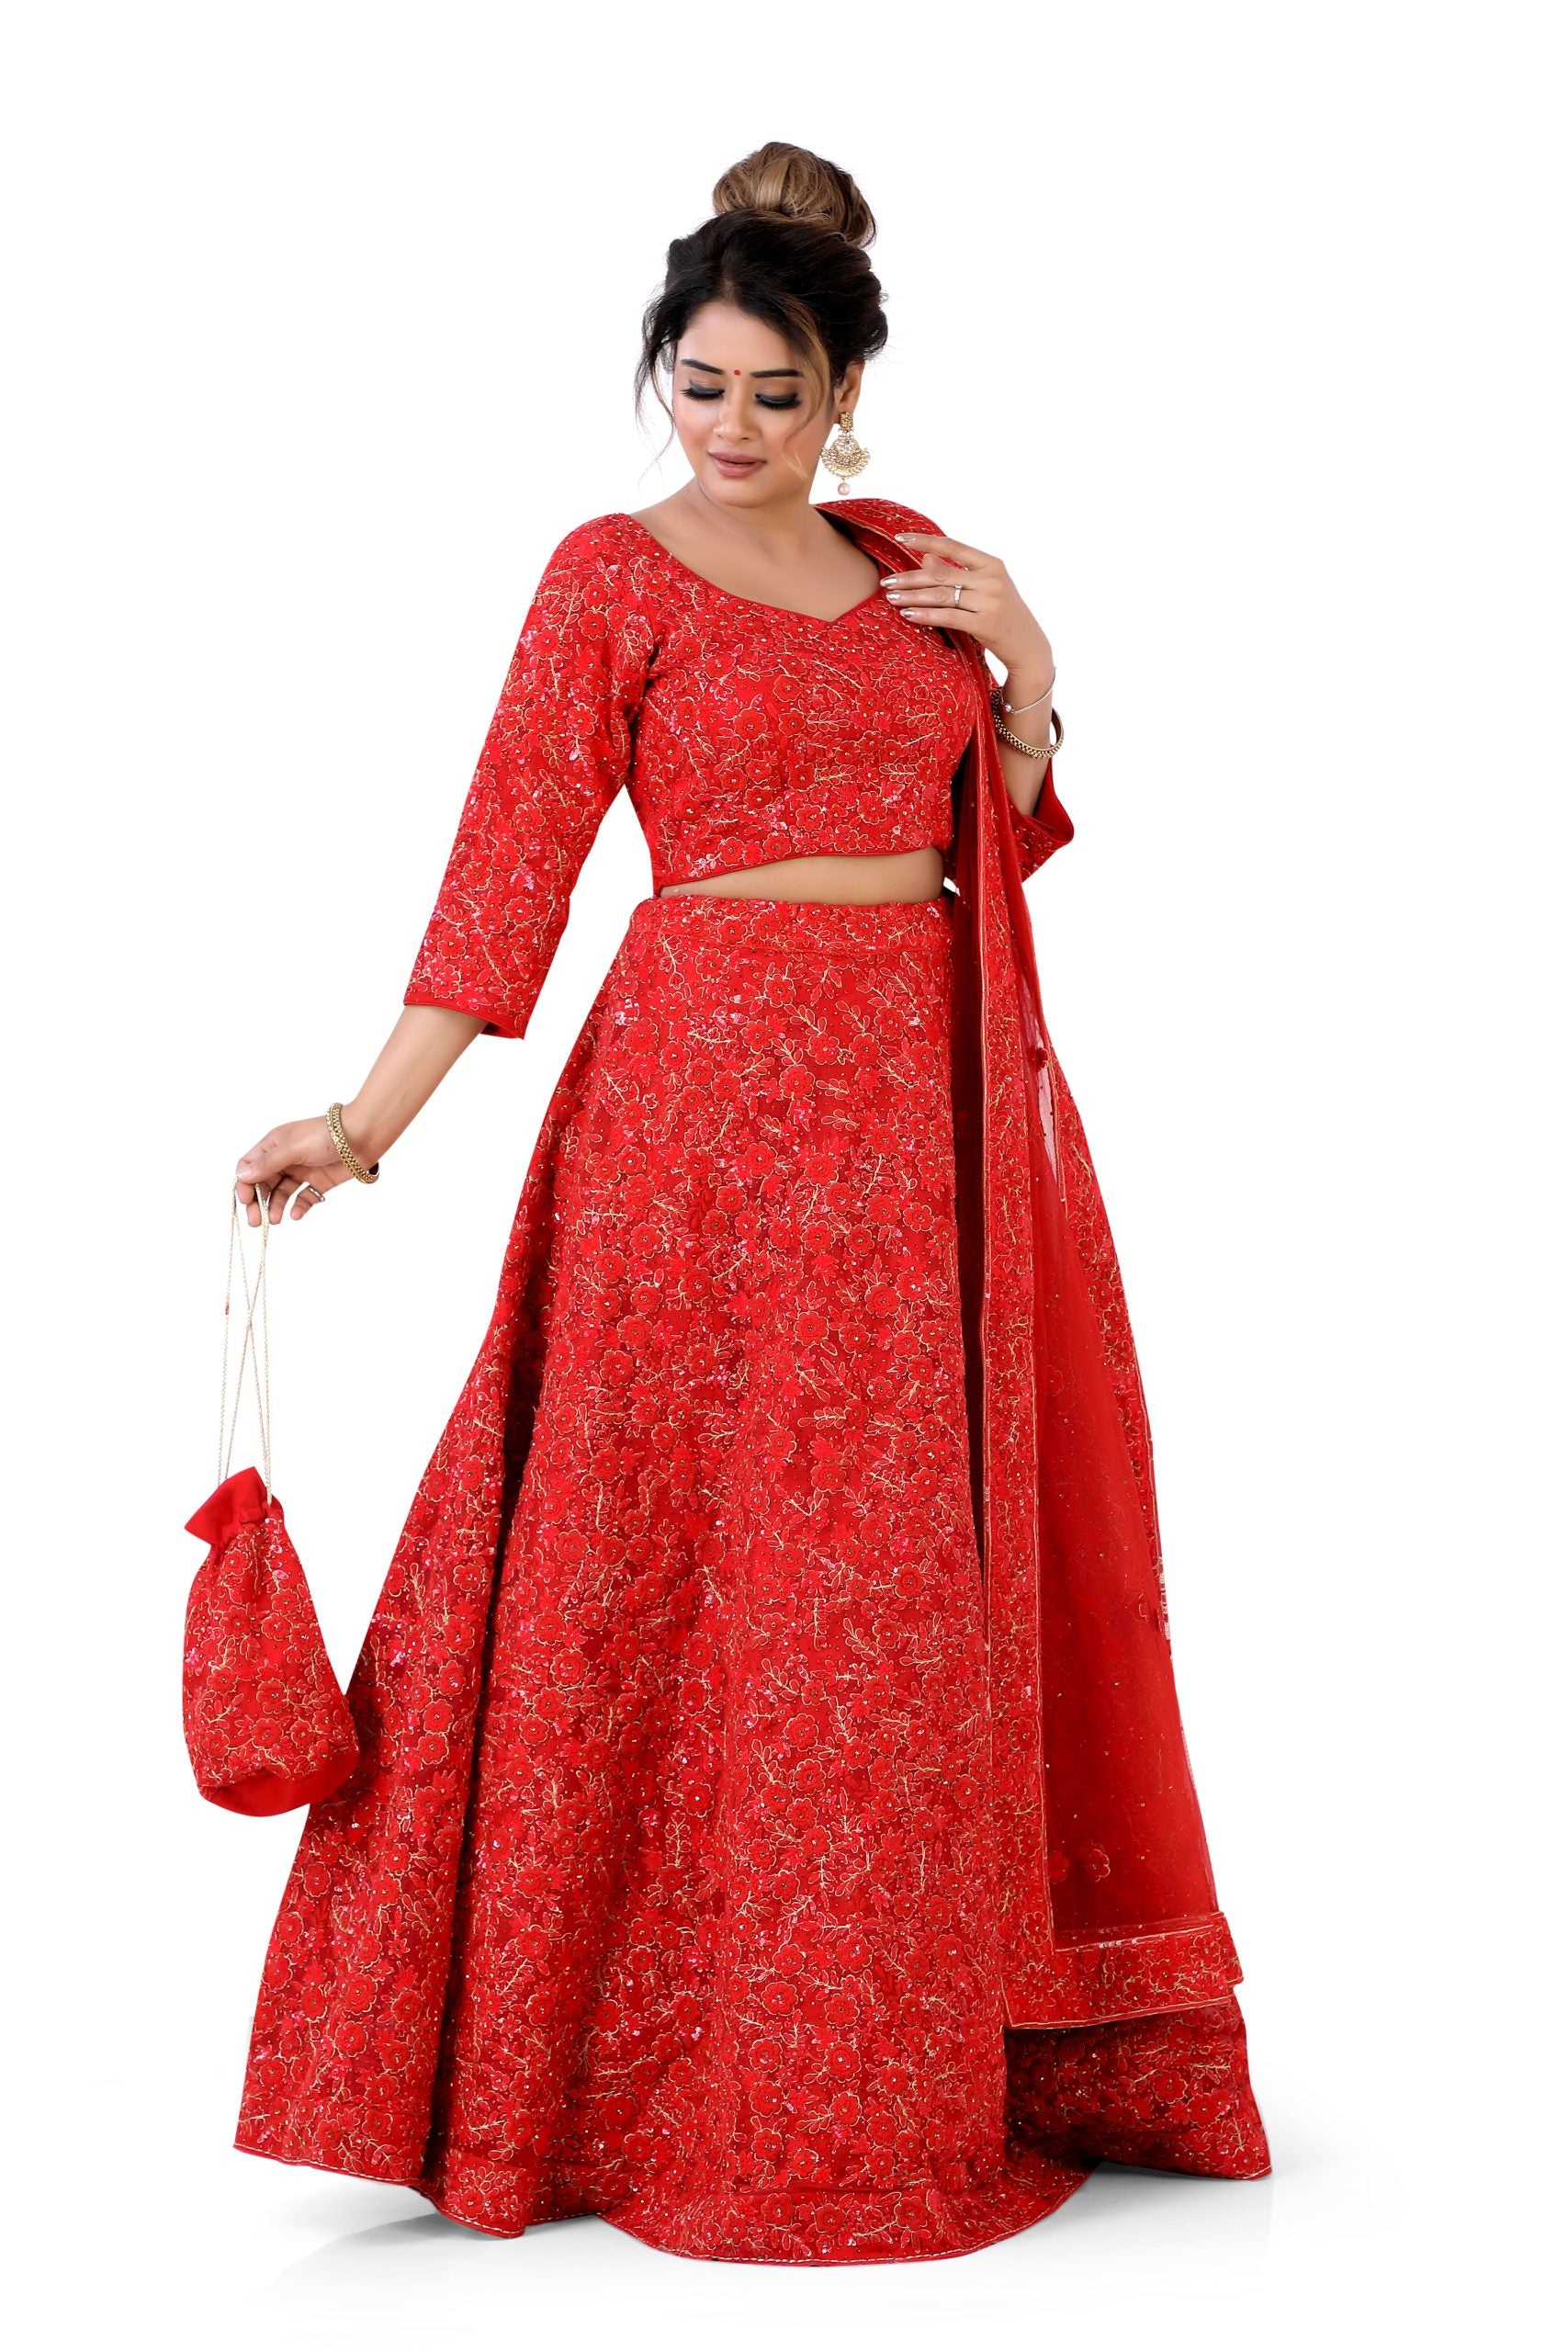 Red Bridal Floral Lehenga Choli - Premium Bridal lehenga from Dulhan Exclusives - Just $2250! Shop now at Dulhan Exclusives